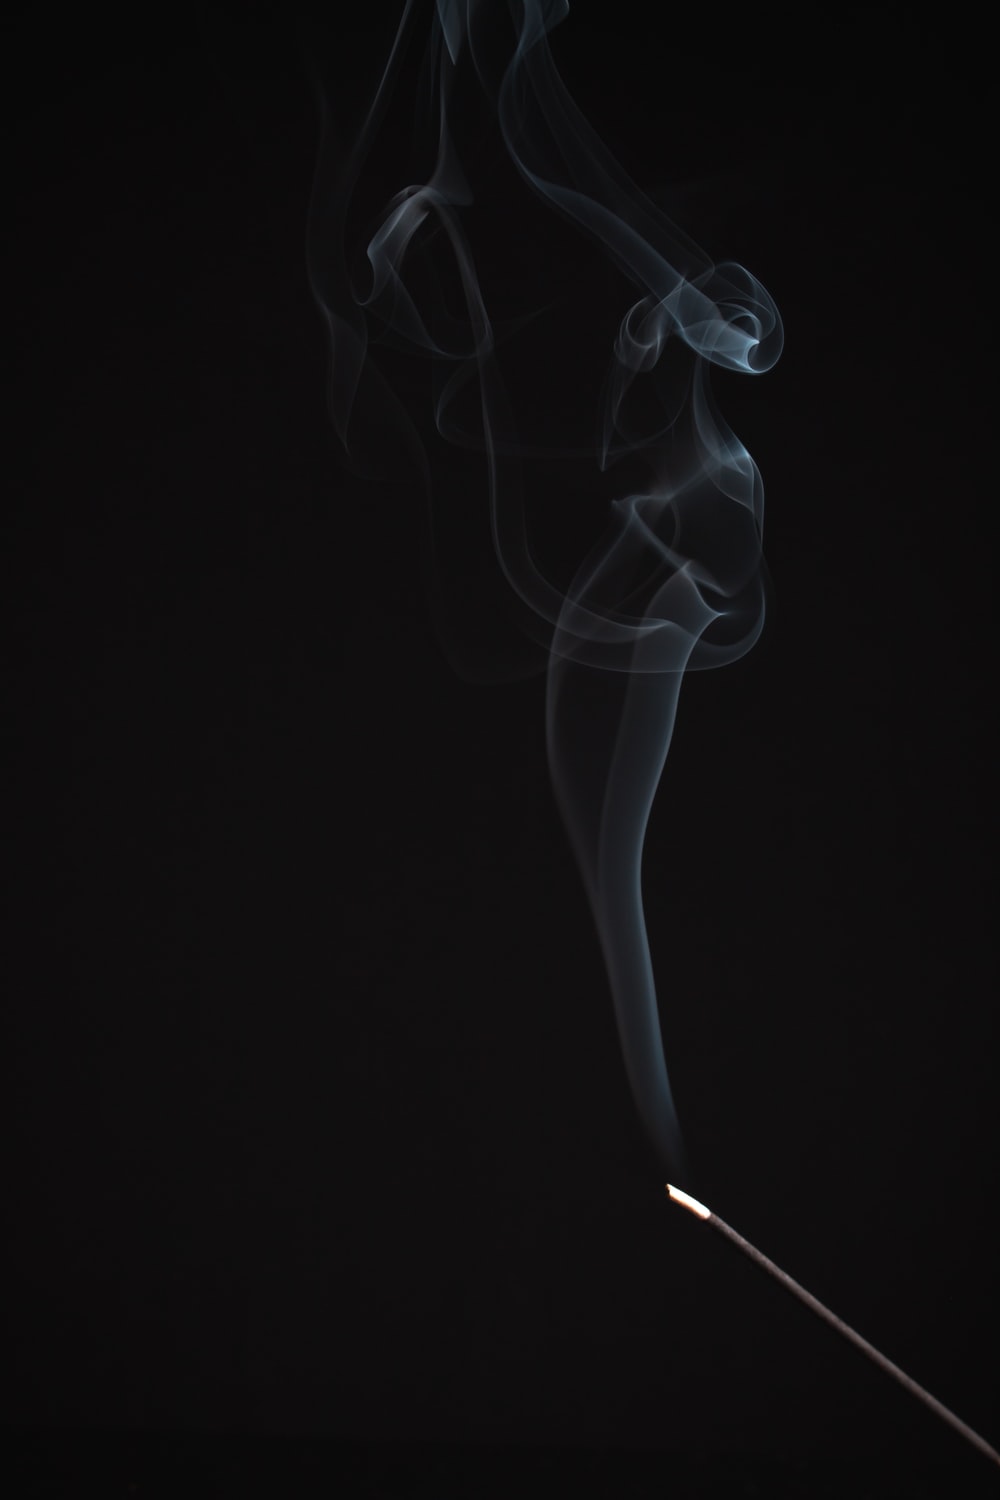 Incense Smoke Picture. Download Free Image